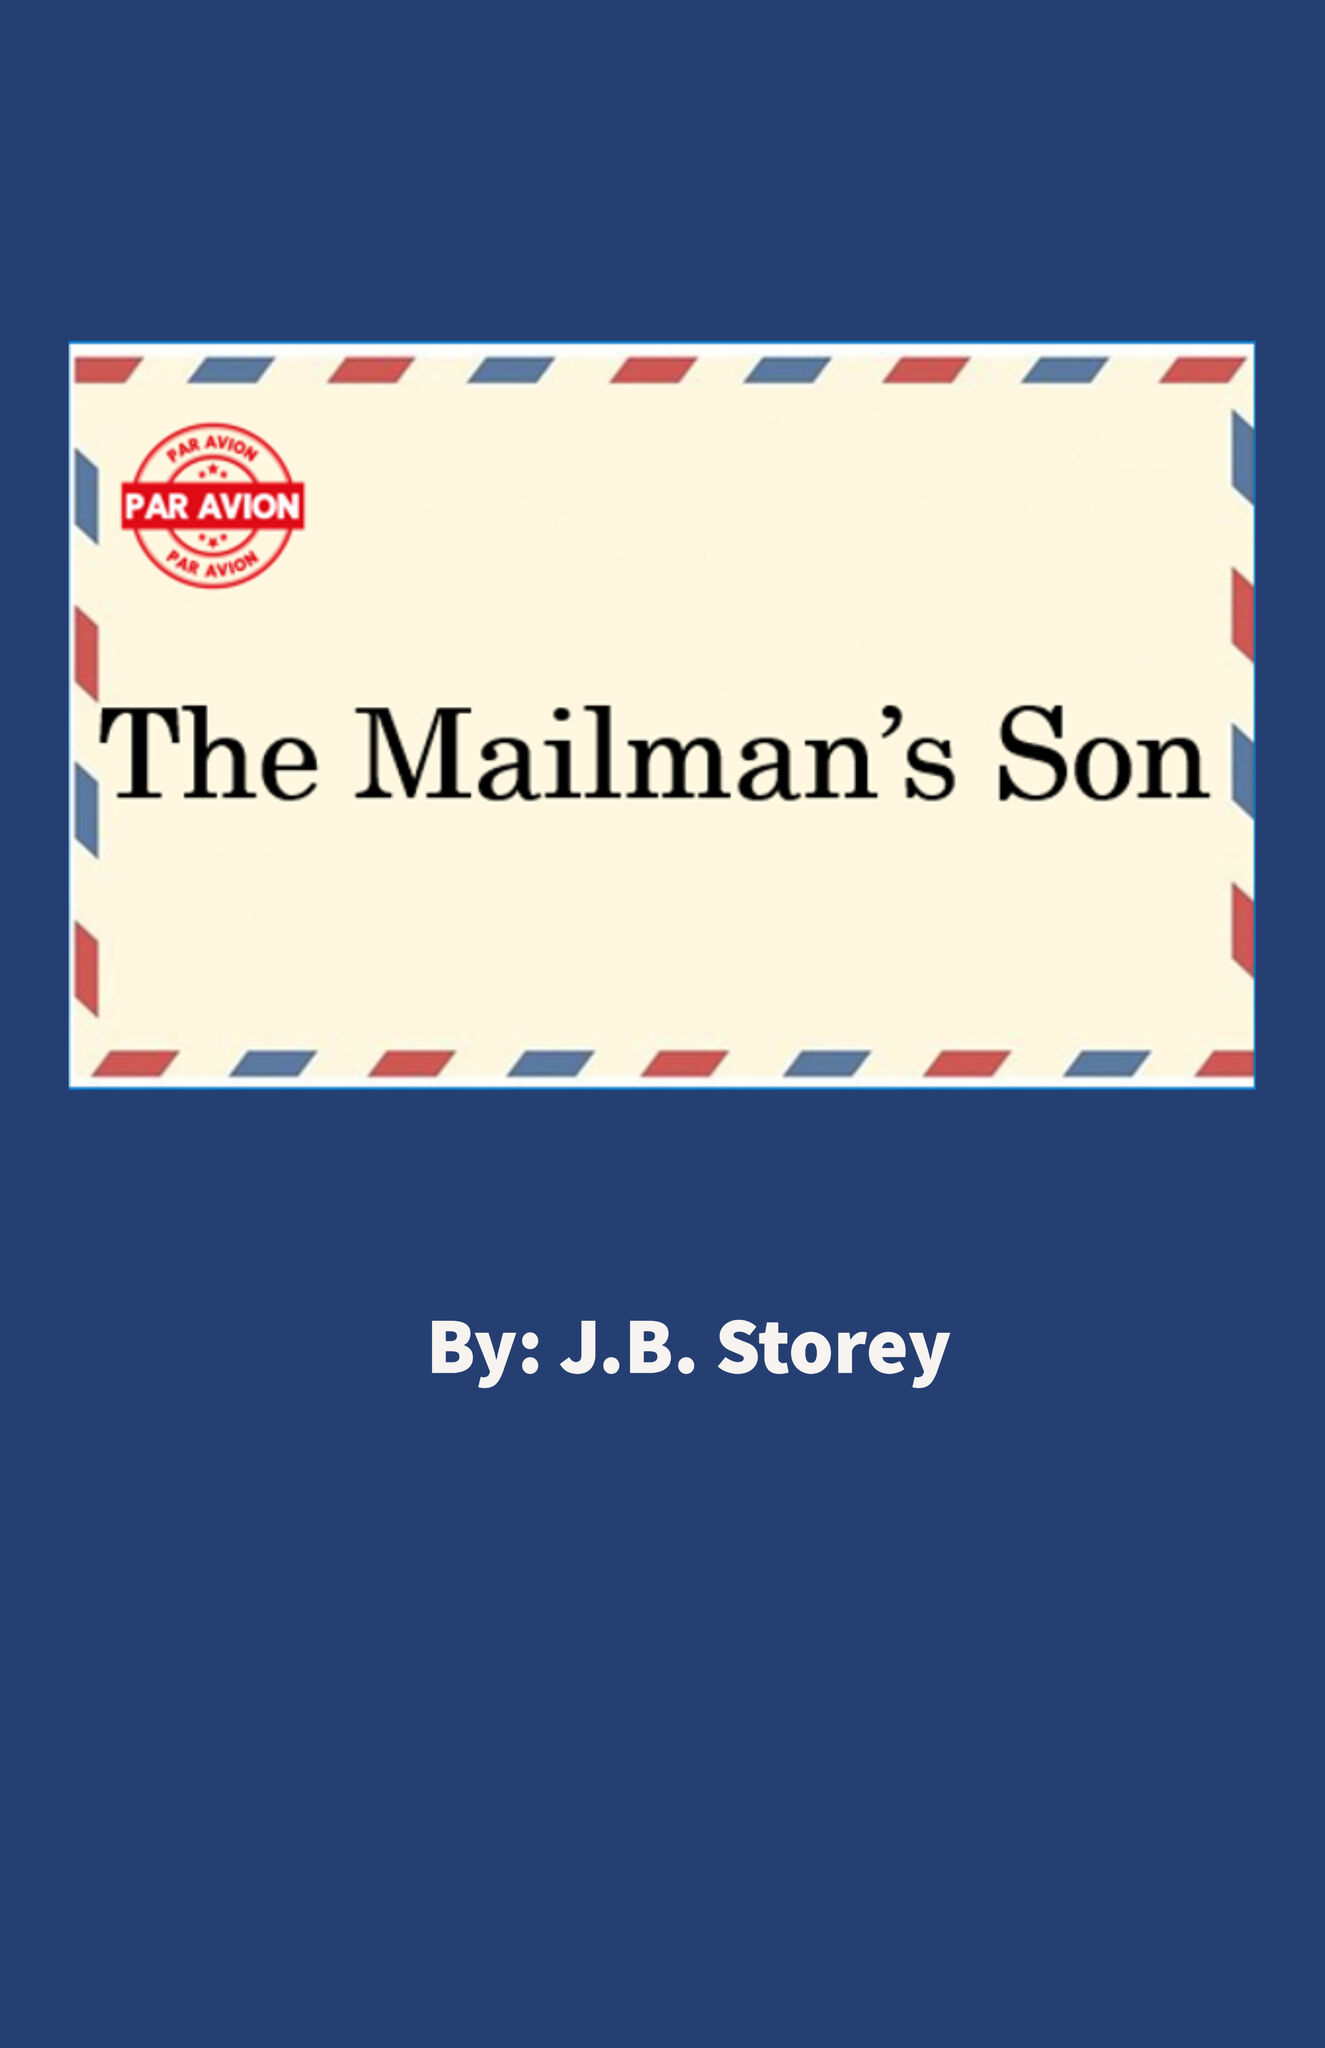 THE MAILMAN'S SON